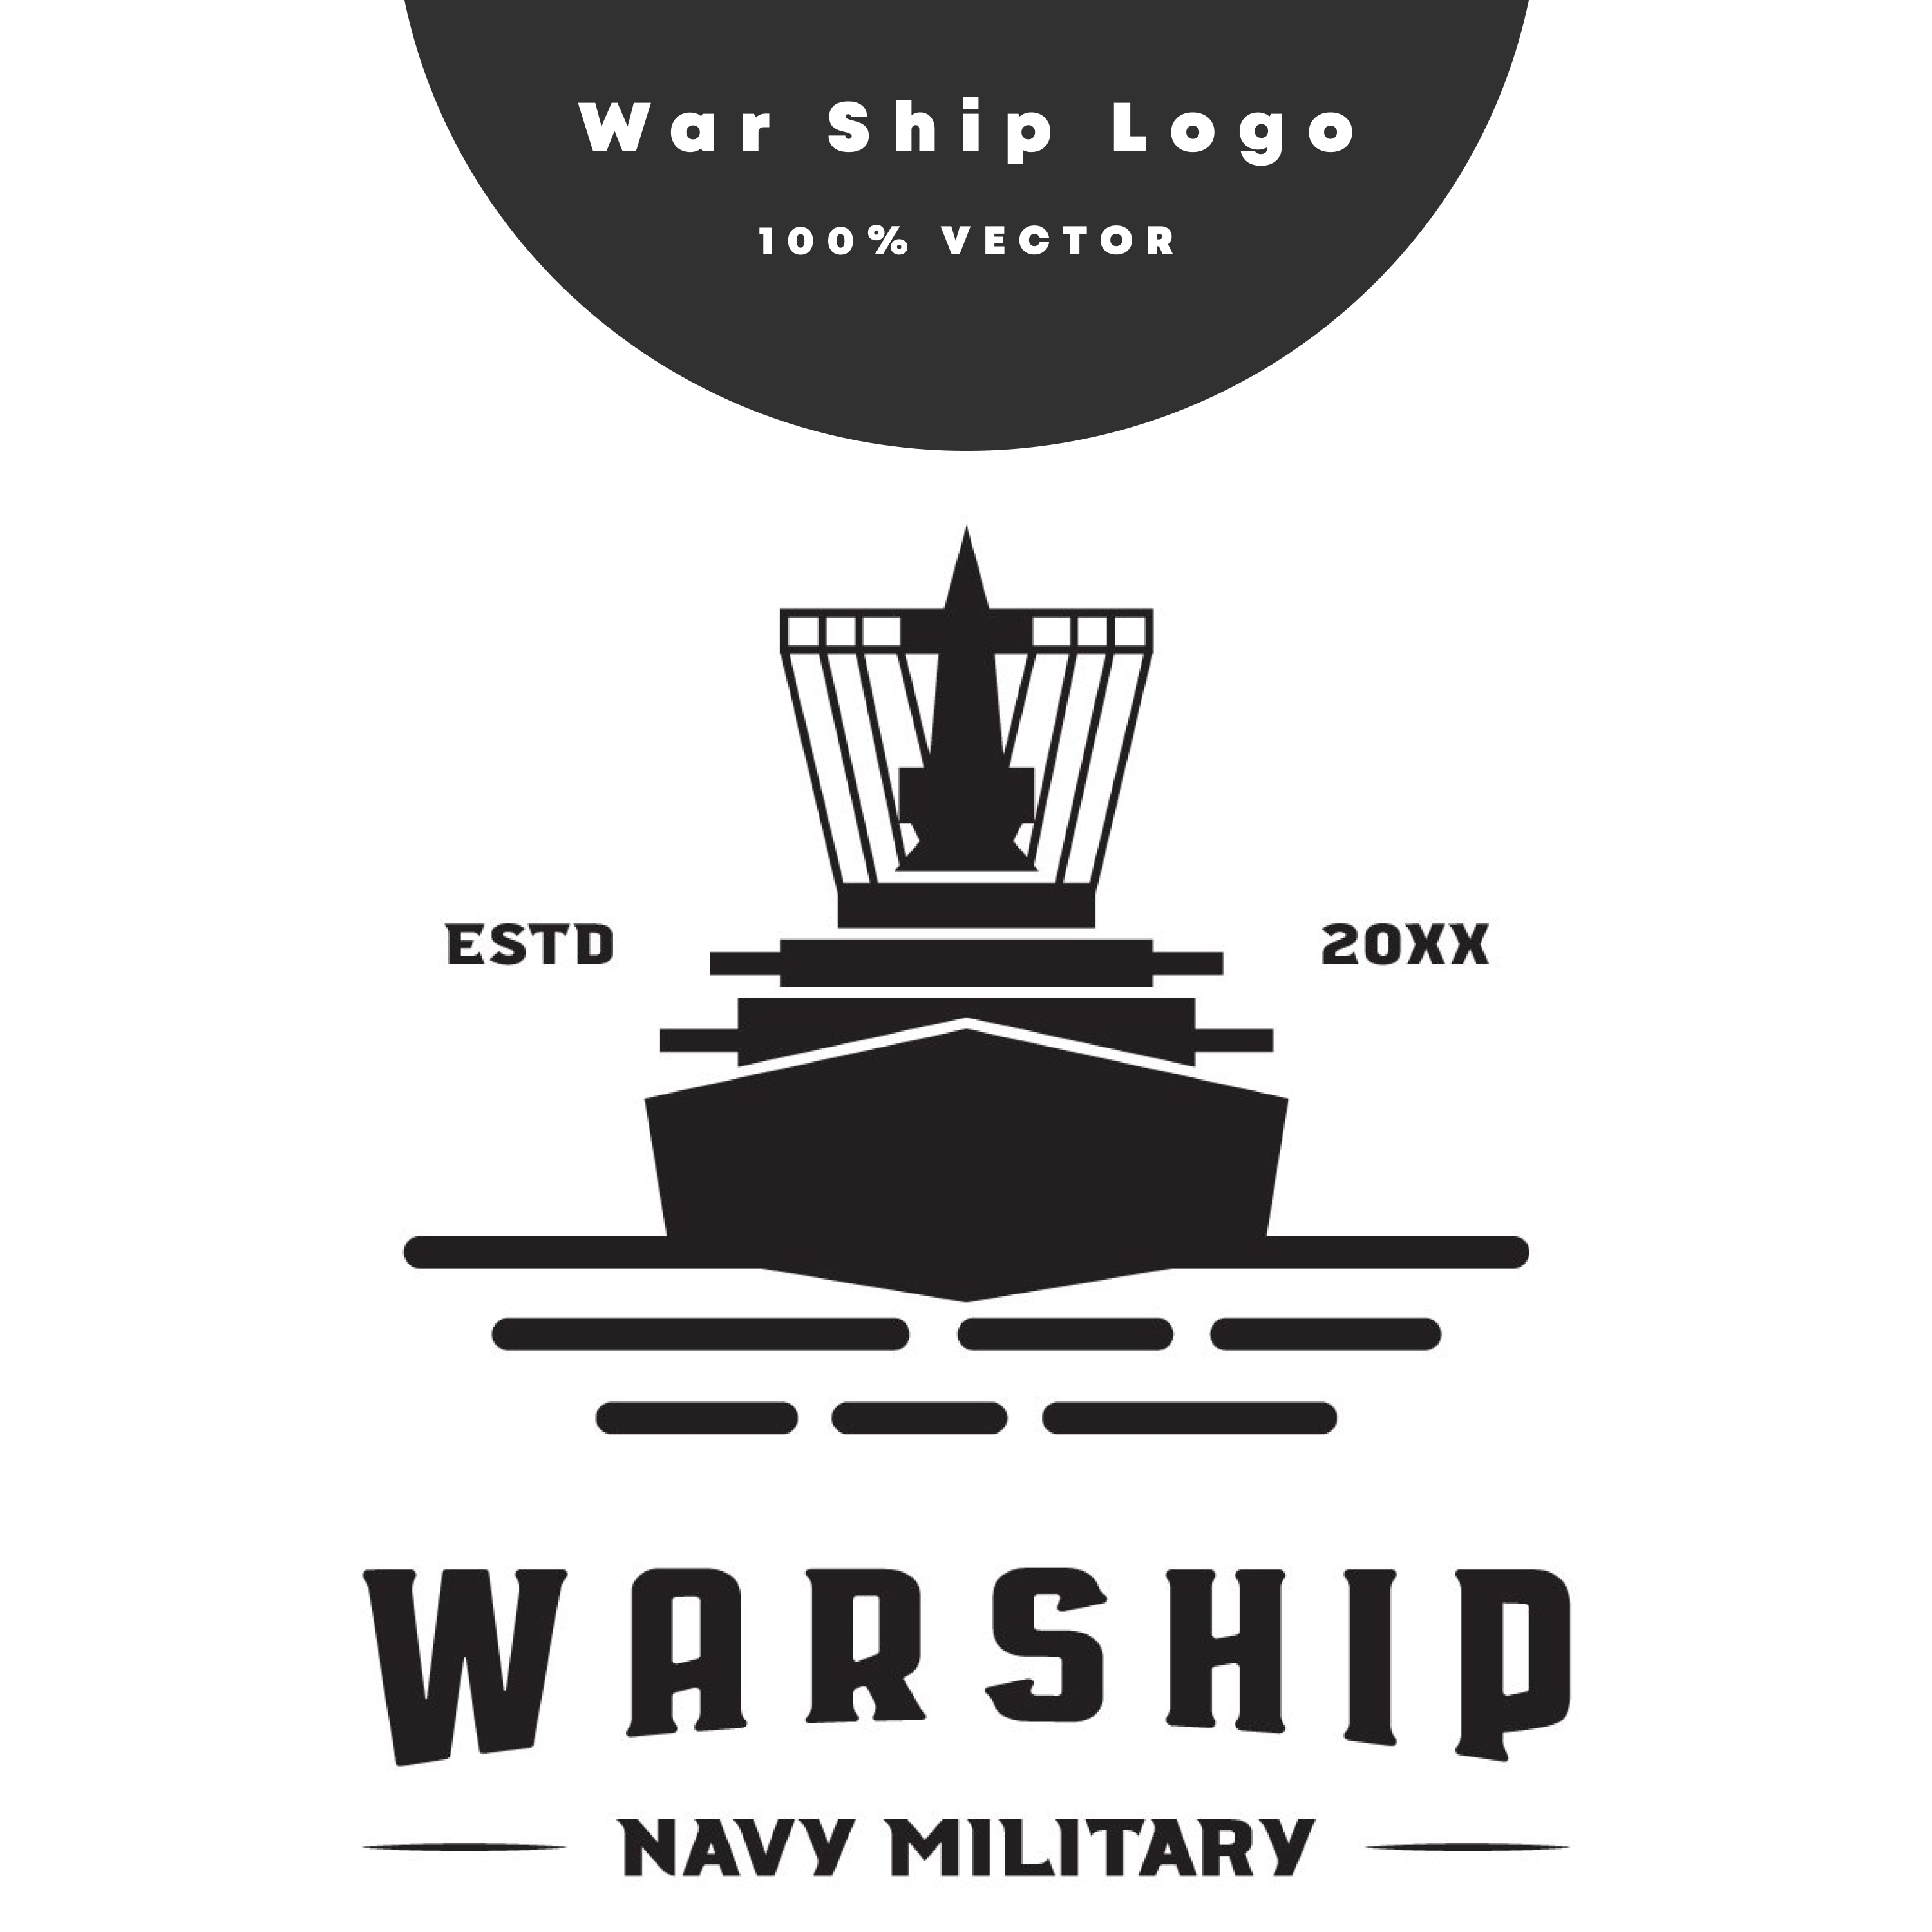 War Ship Logo cover.